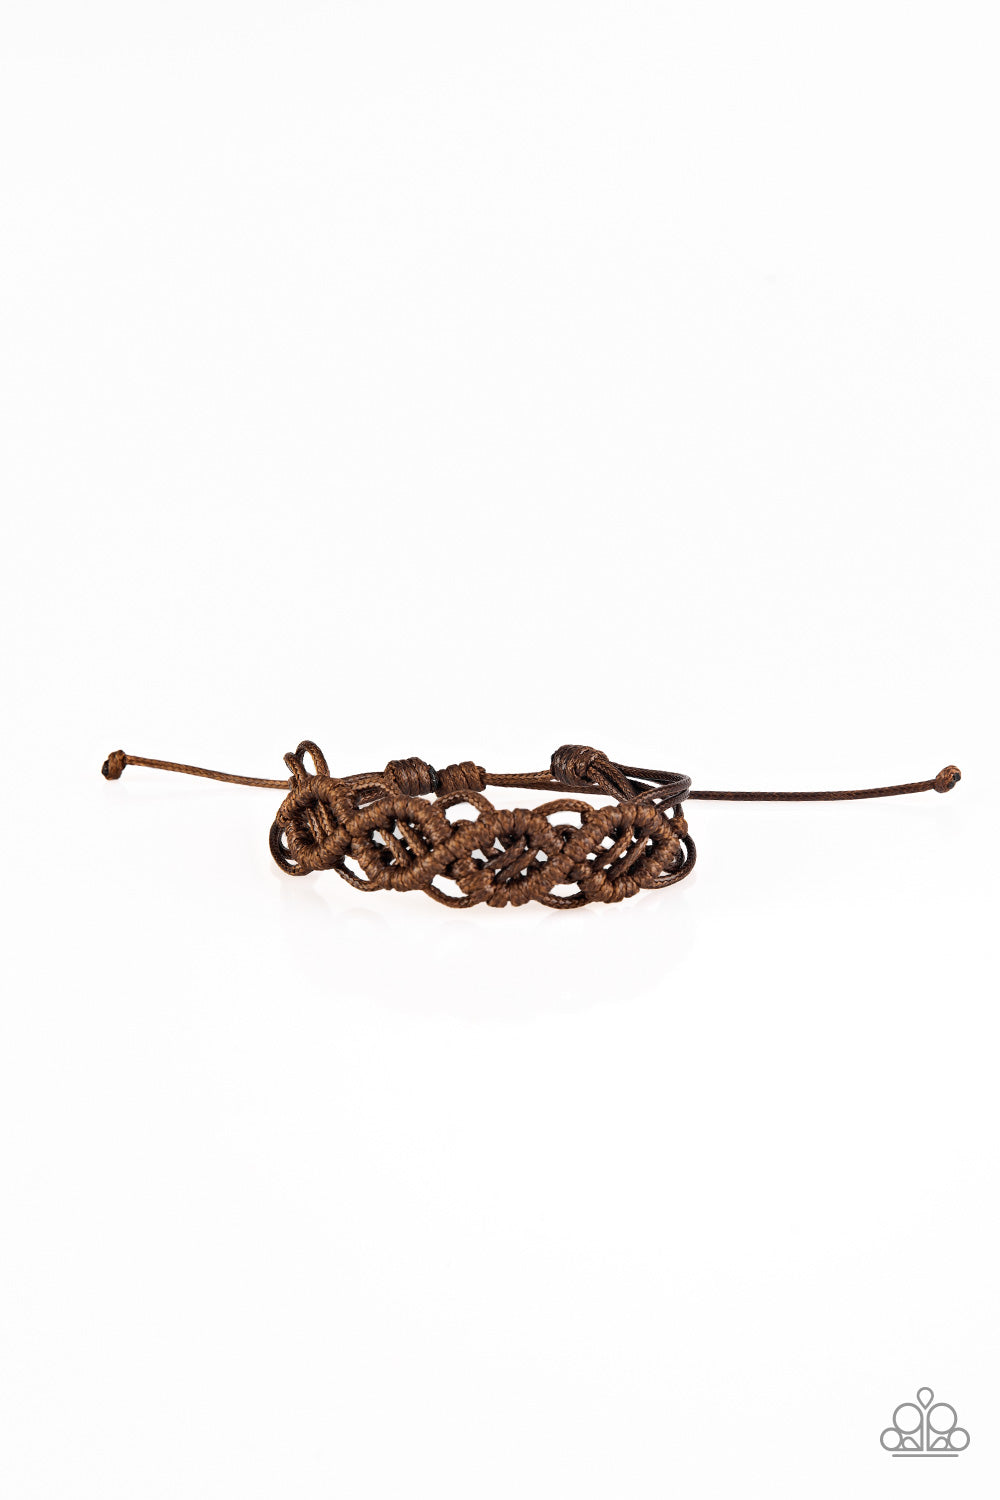 Boondocks and Bonfires - Brown Urban Bracelet